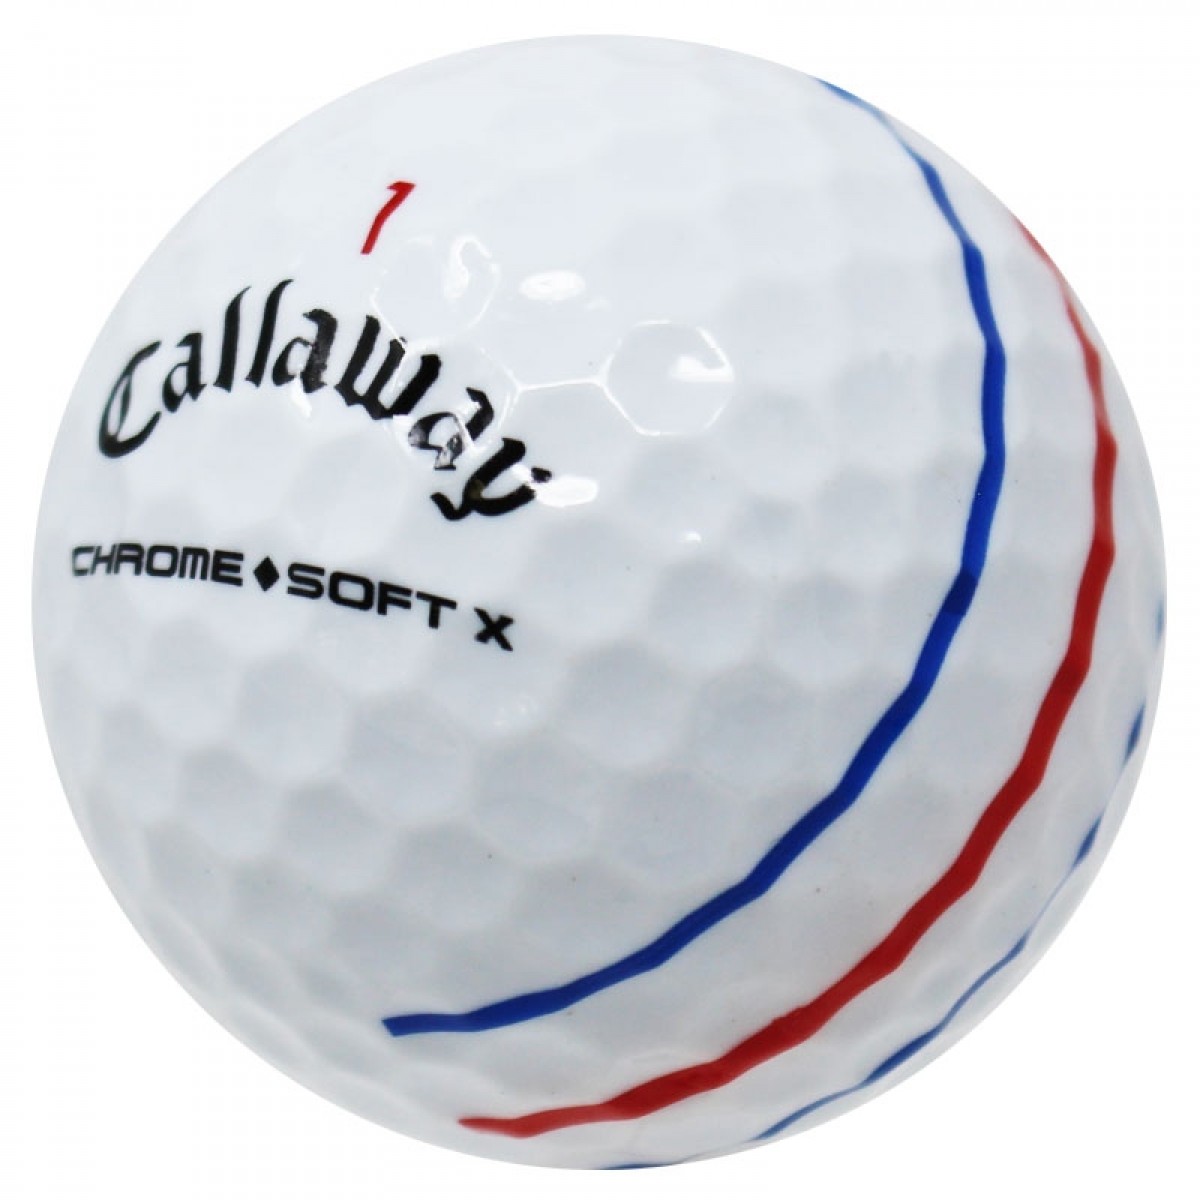 Callaway Chrome Soft X Prototype Ball Tour Players